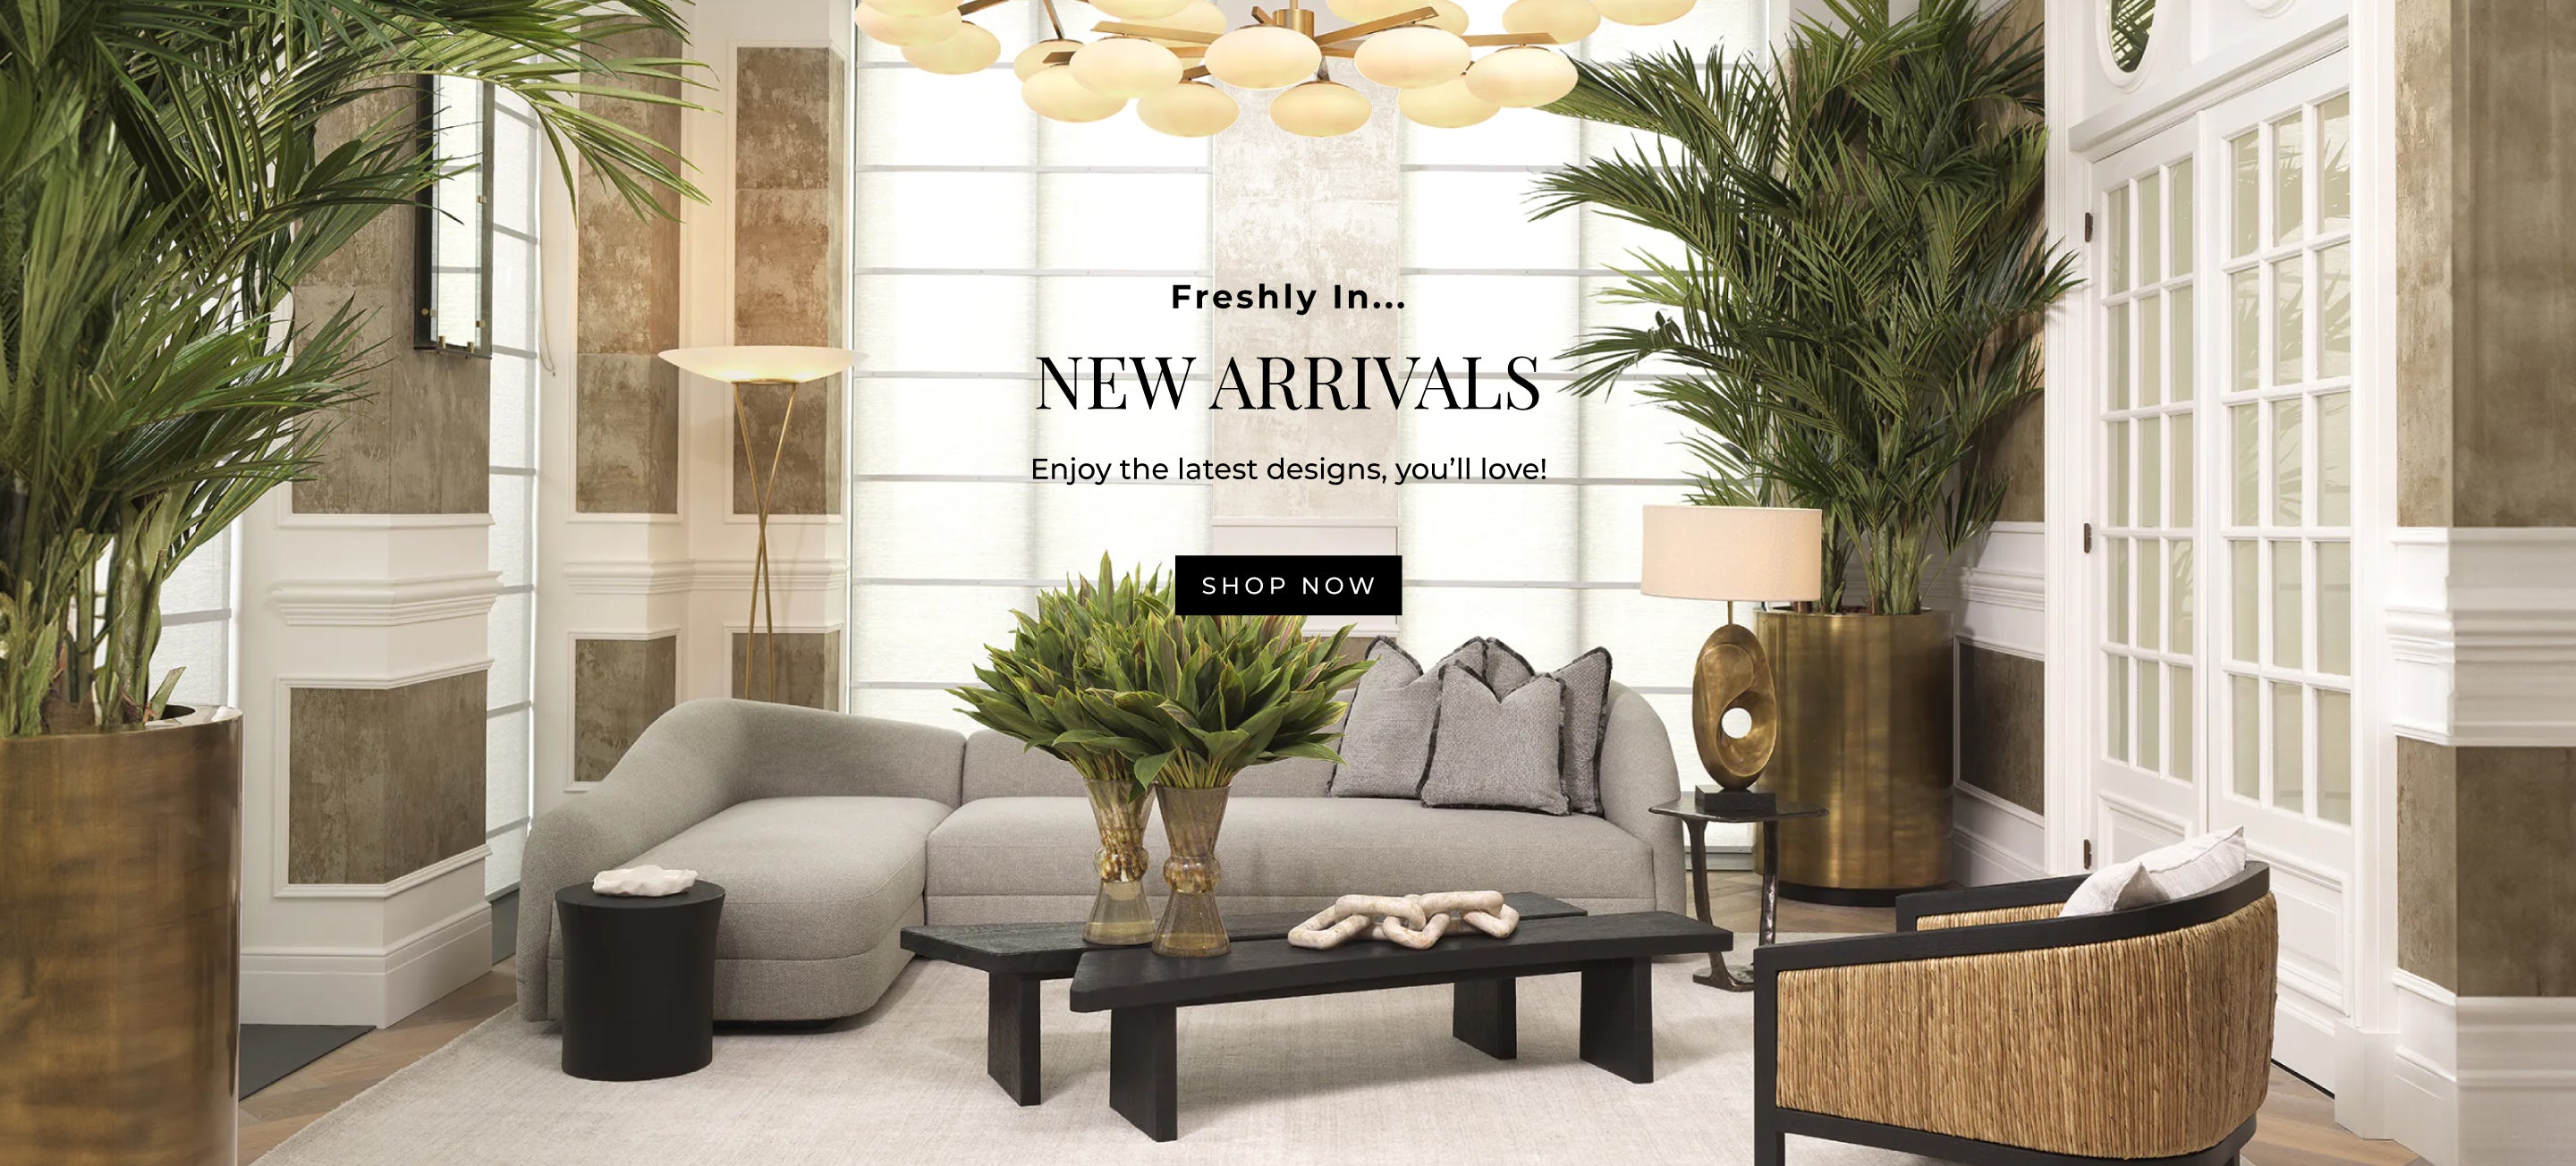 Eichholtz Furniture, OROA, Luxury Furniture, Lighting & Decor, New Arrivals, High-end Furniture